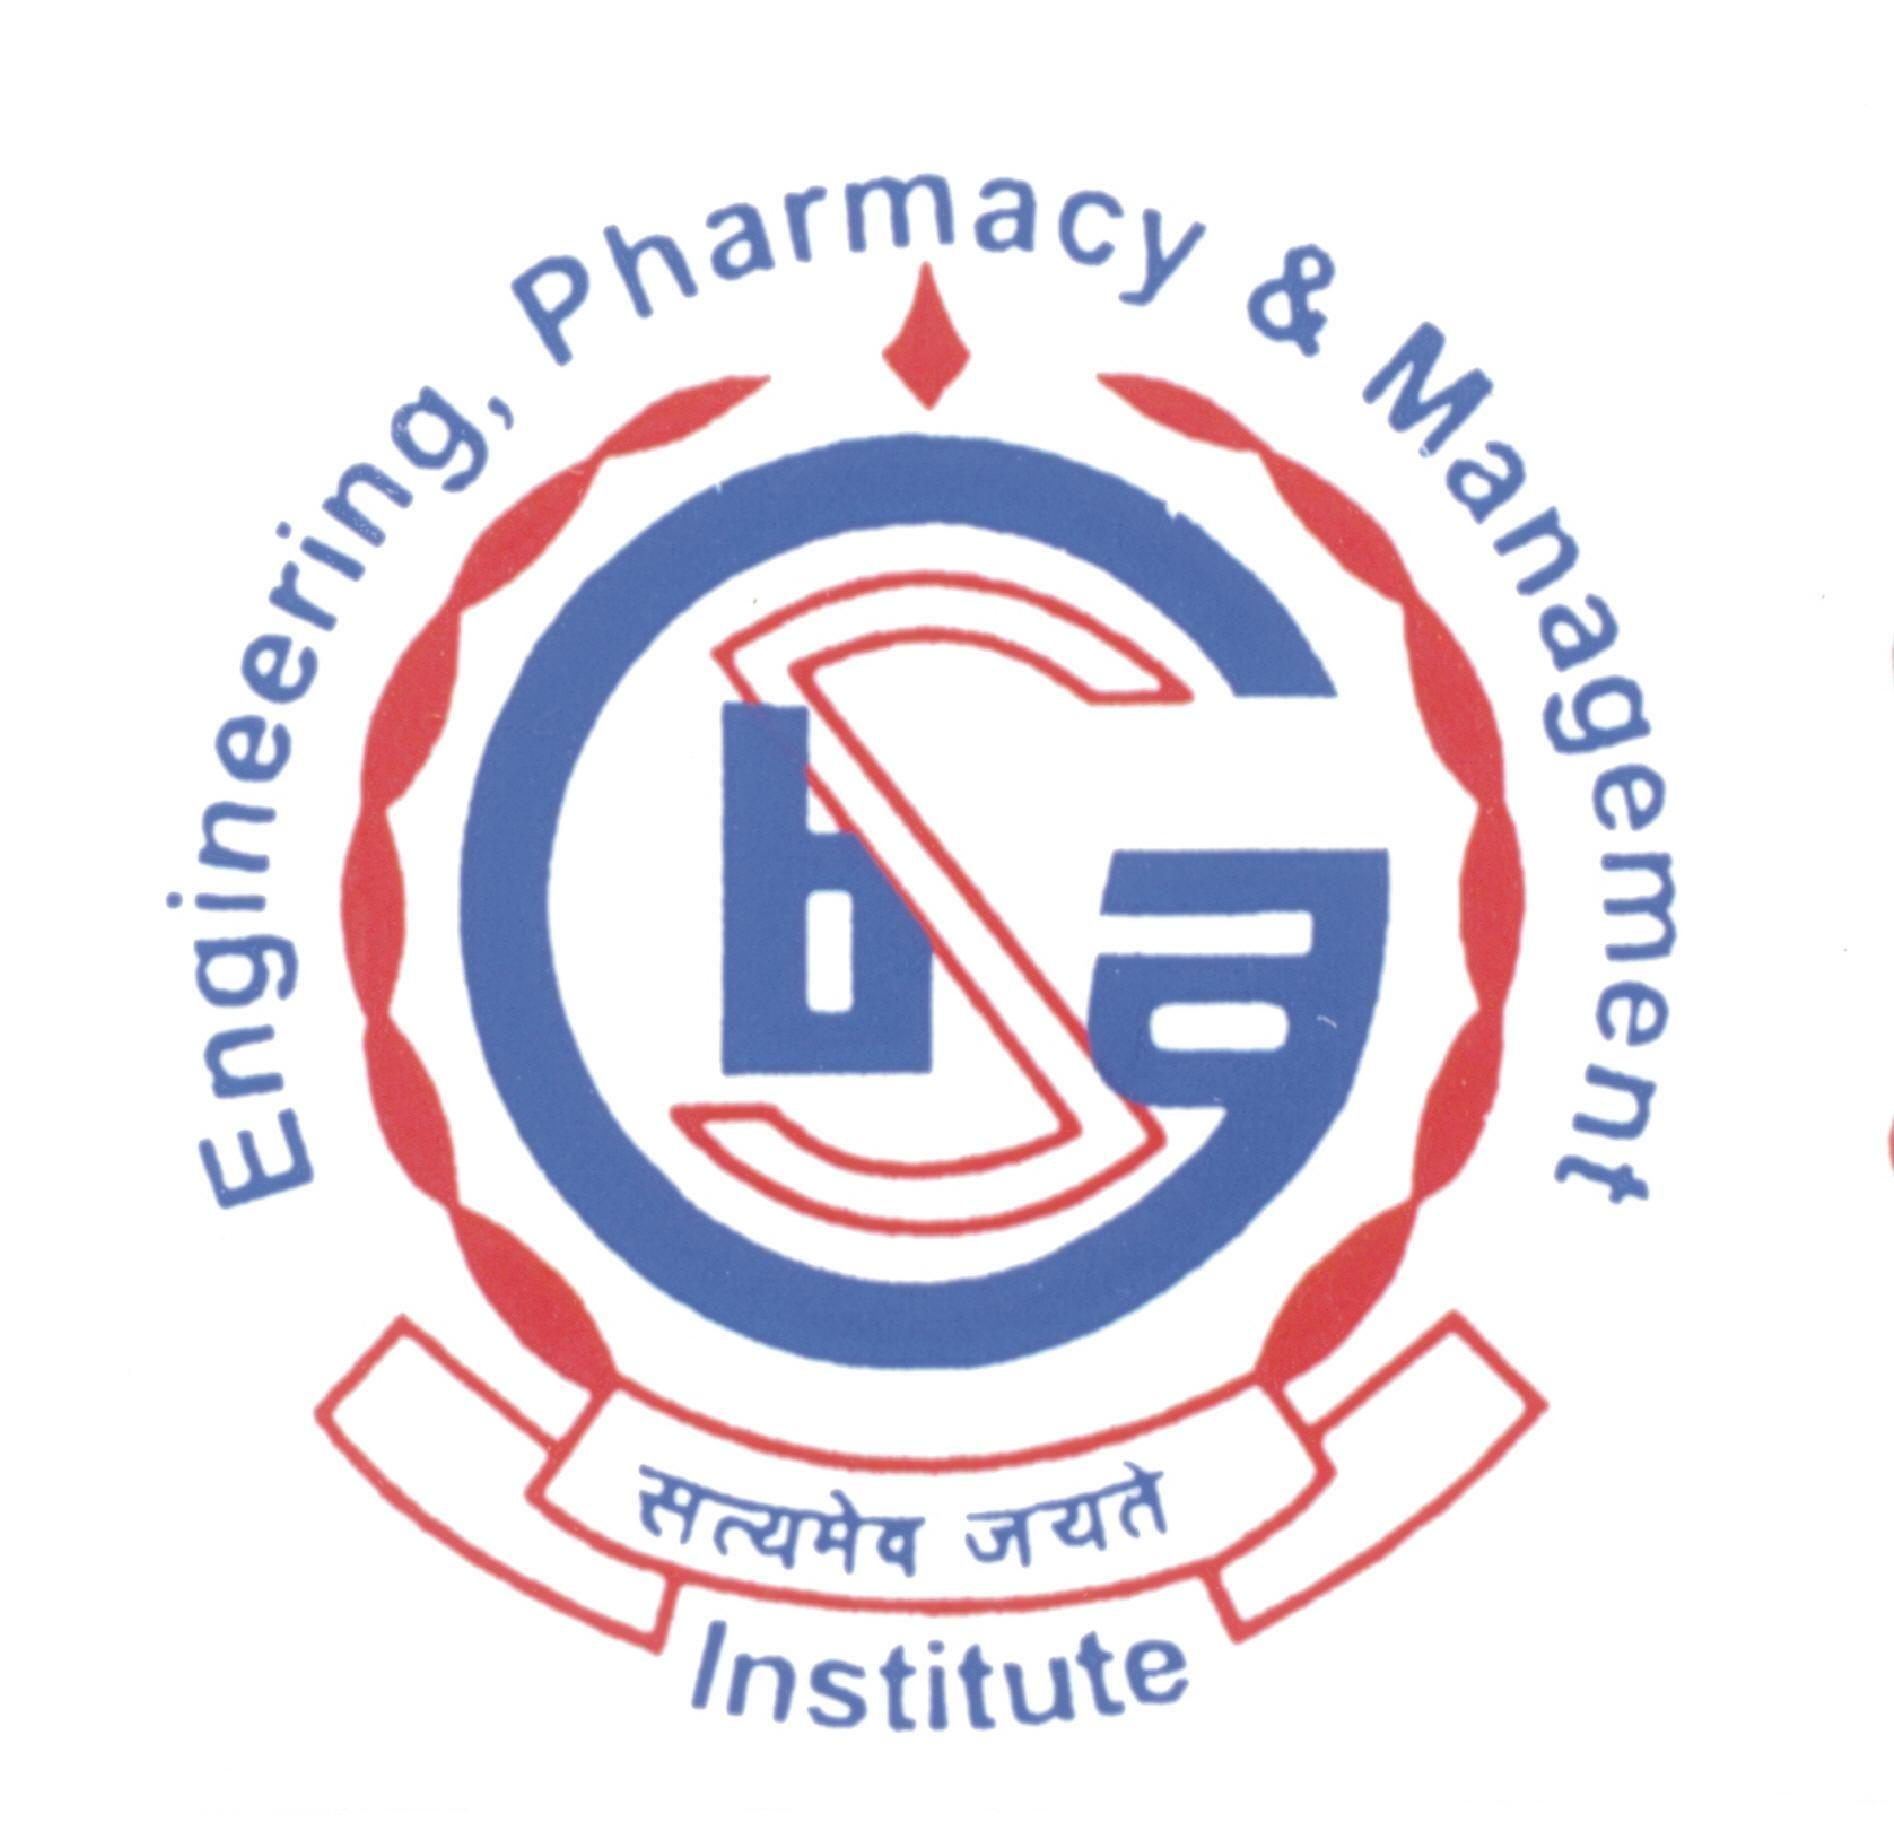 GSBA Logo - GSBA Engineering Pharmacy & Management Institute, Roorkee